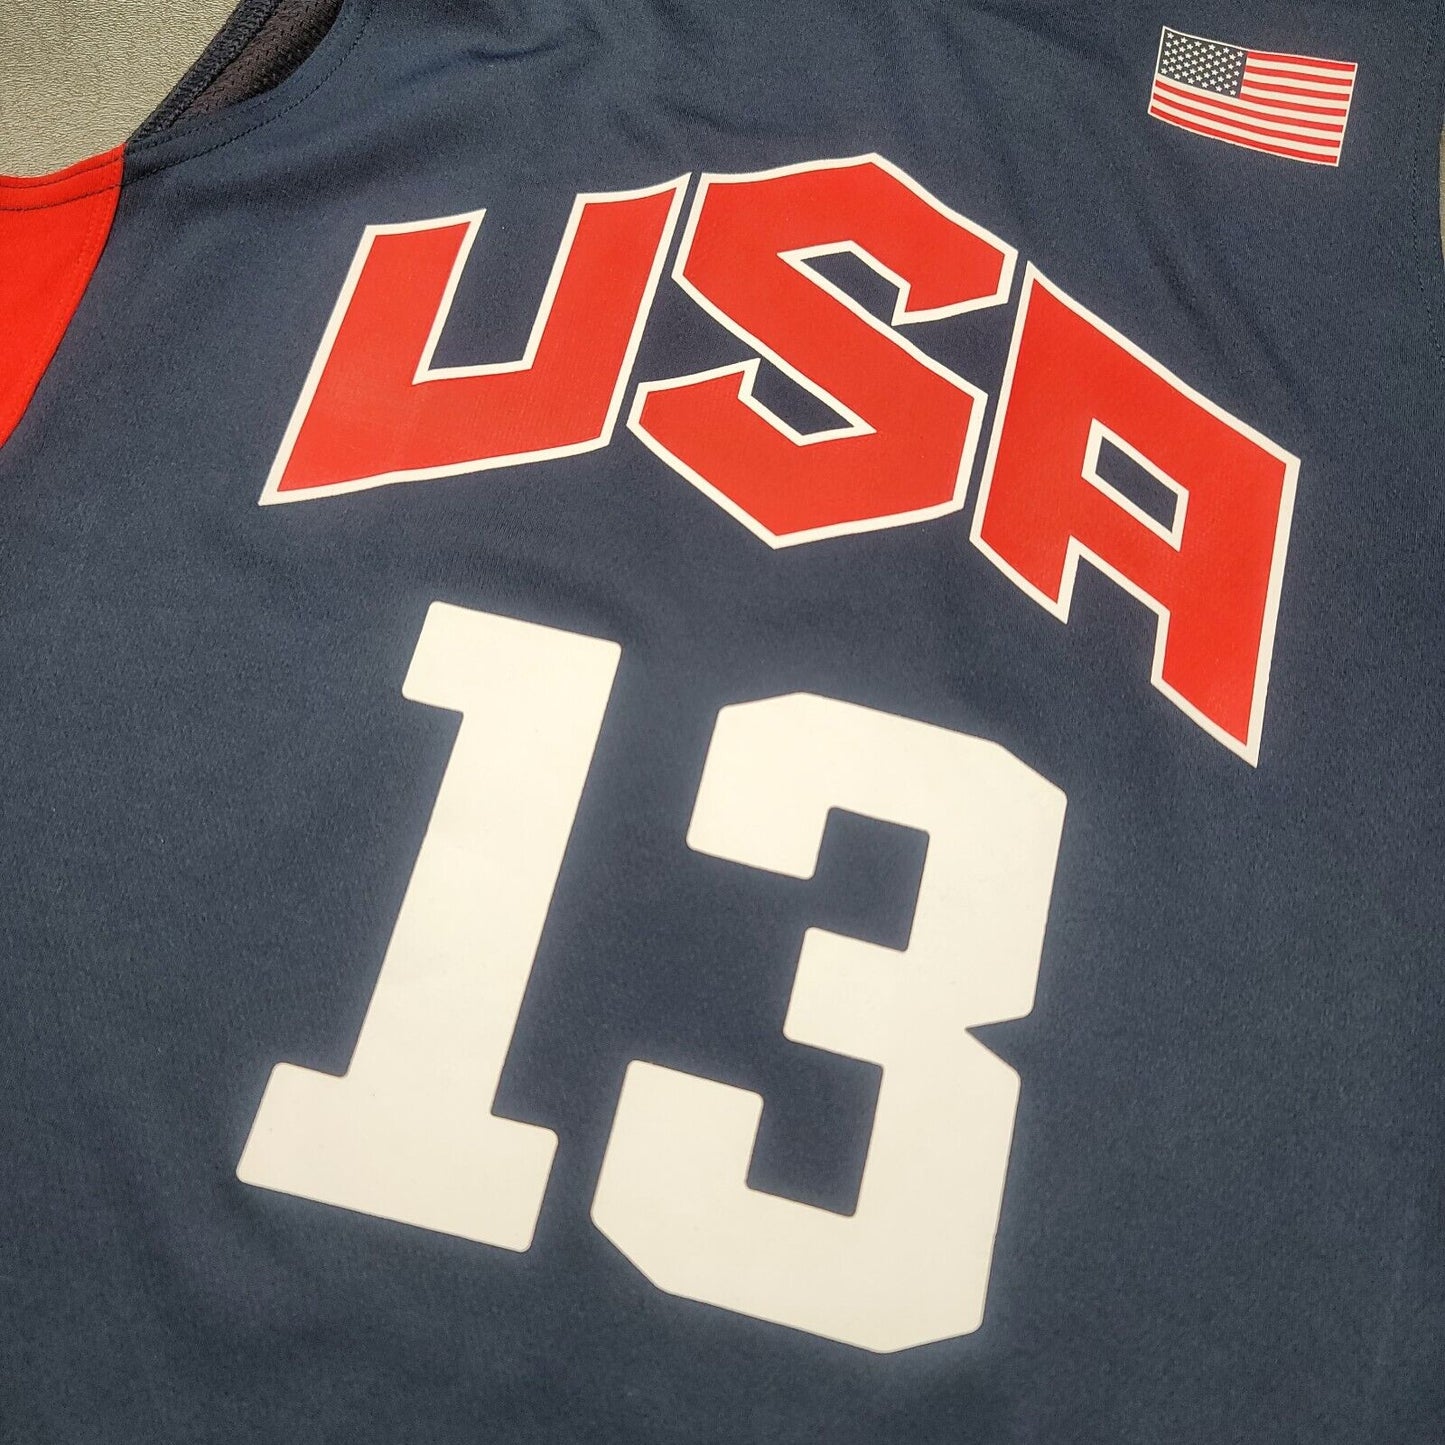 100% Authentic Chris Paul Nike 2012 USA Basketball Jersey Size M Mens